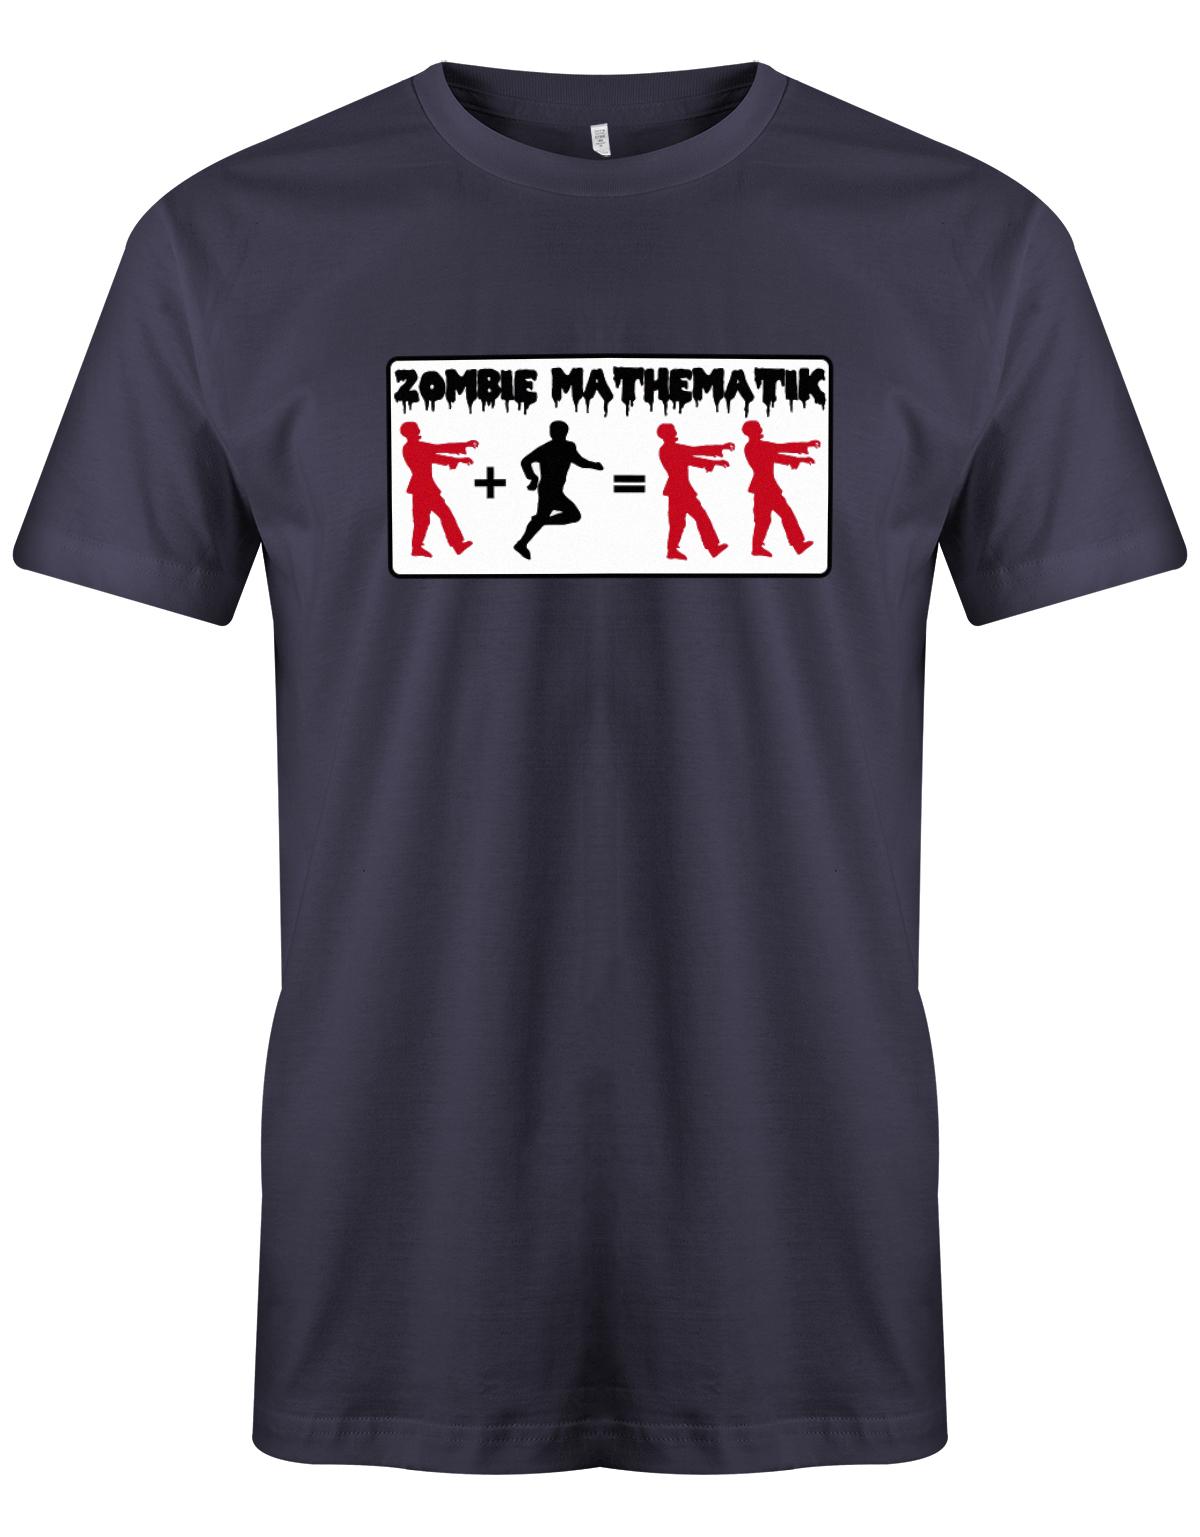 Zombie-Mathematik-Halloween-Shirt-Herren-Navy